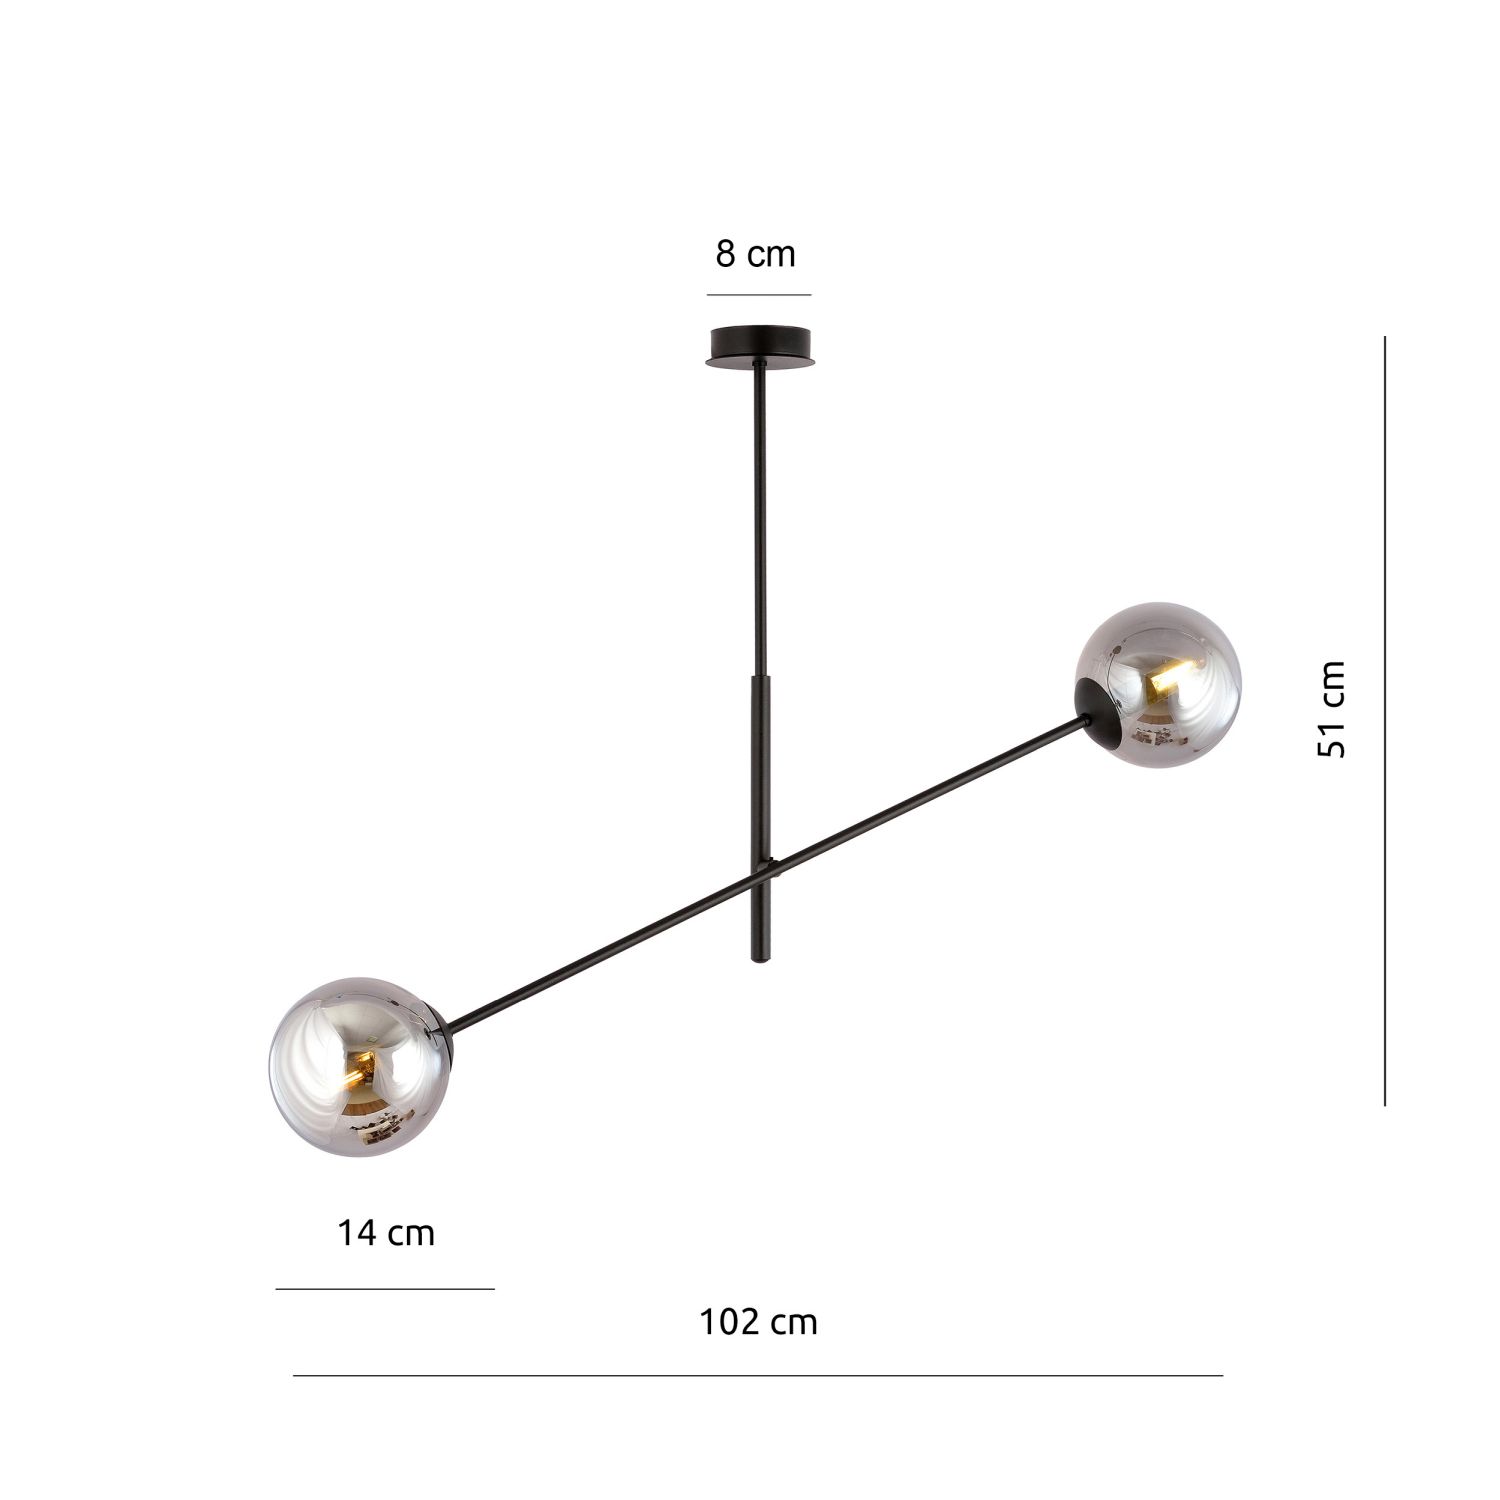 Deckenlampe Rauchglas Metall L: 102 cm schwenkbar 2x E14